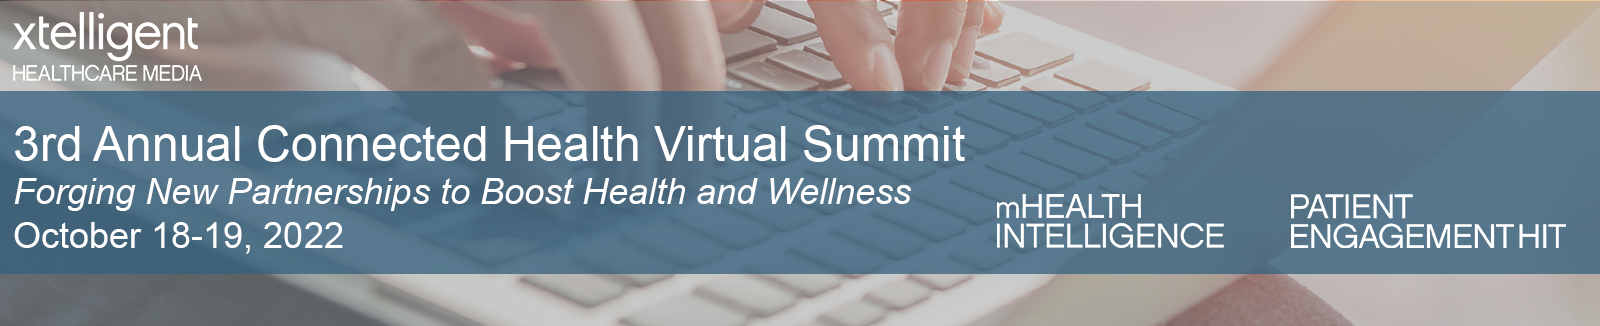 3rd Annual Connected Health Virtual Summit